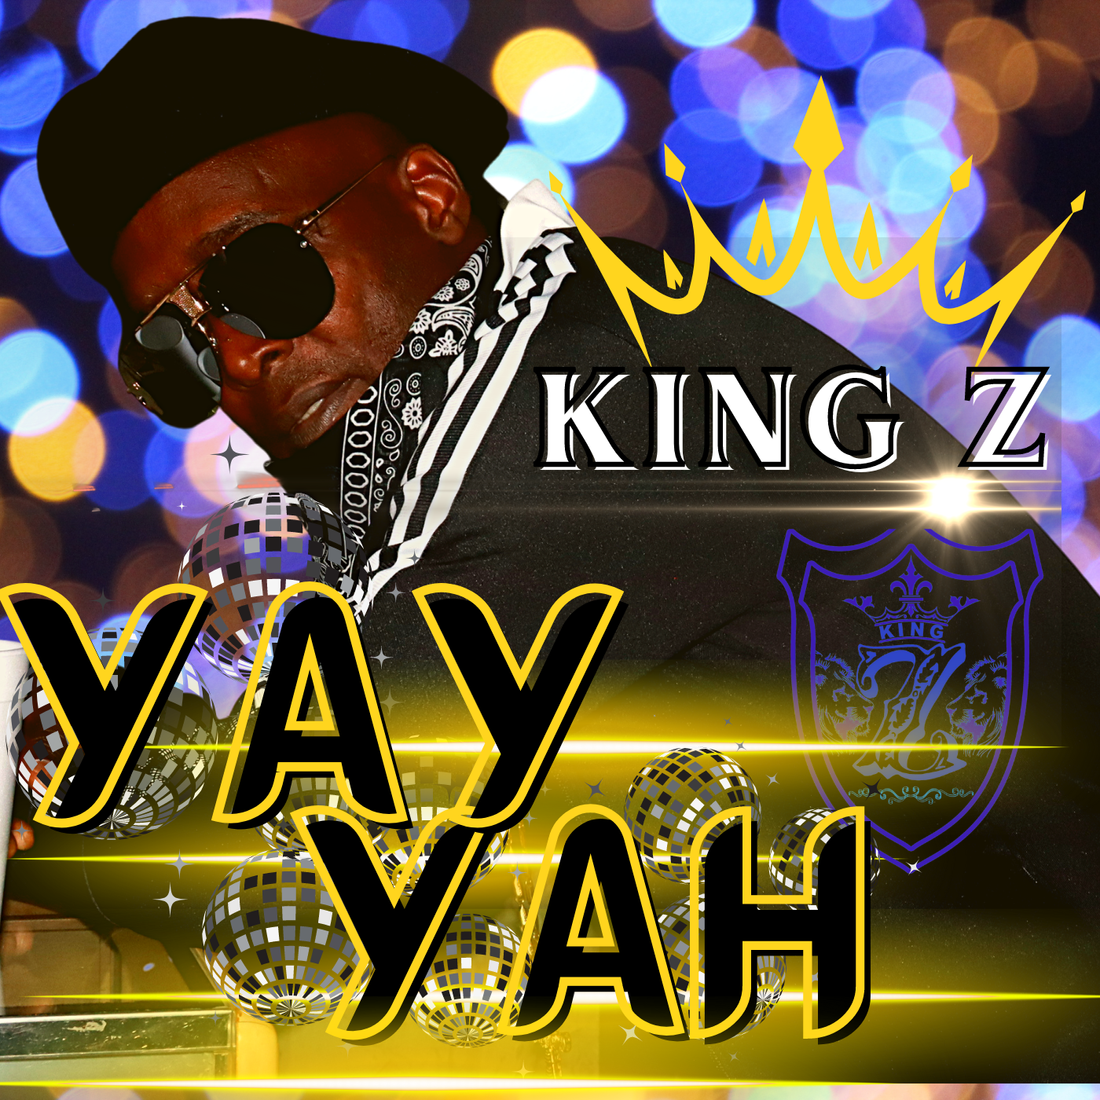 King Z Yay Yah
